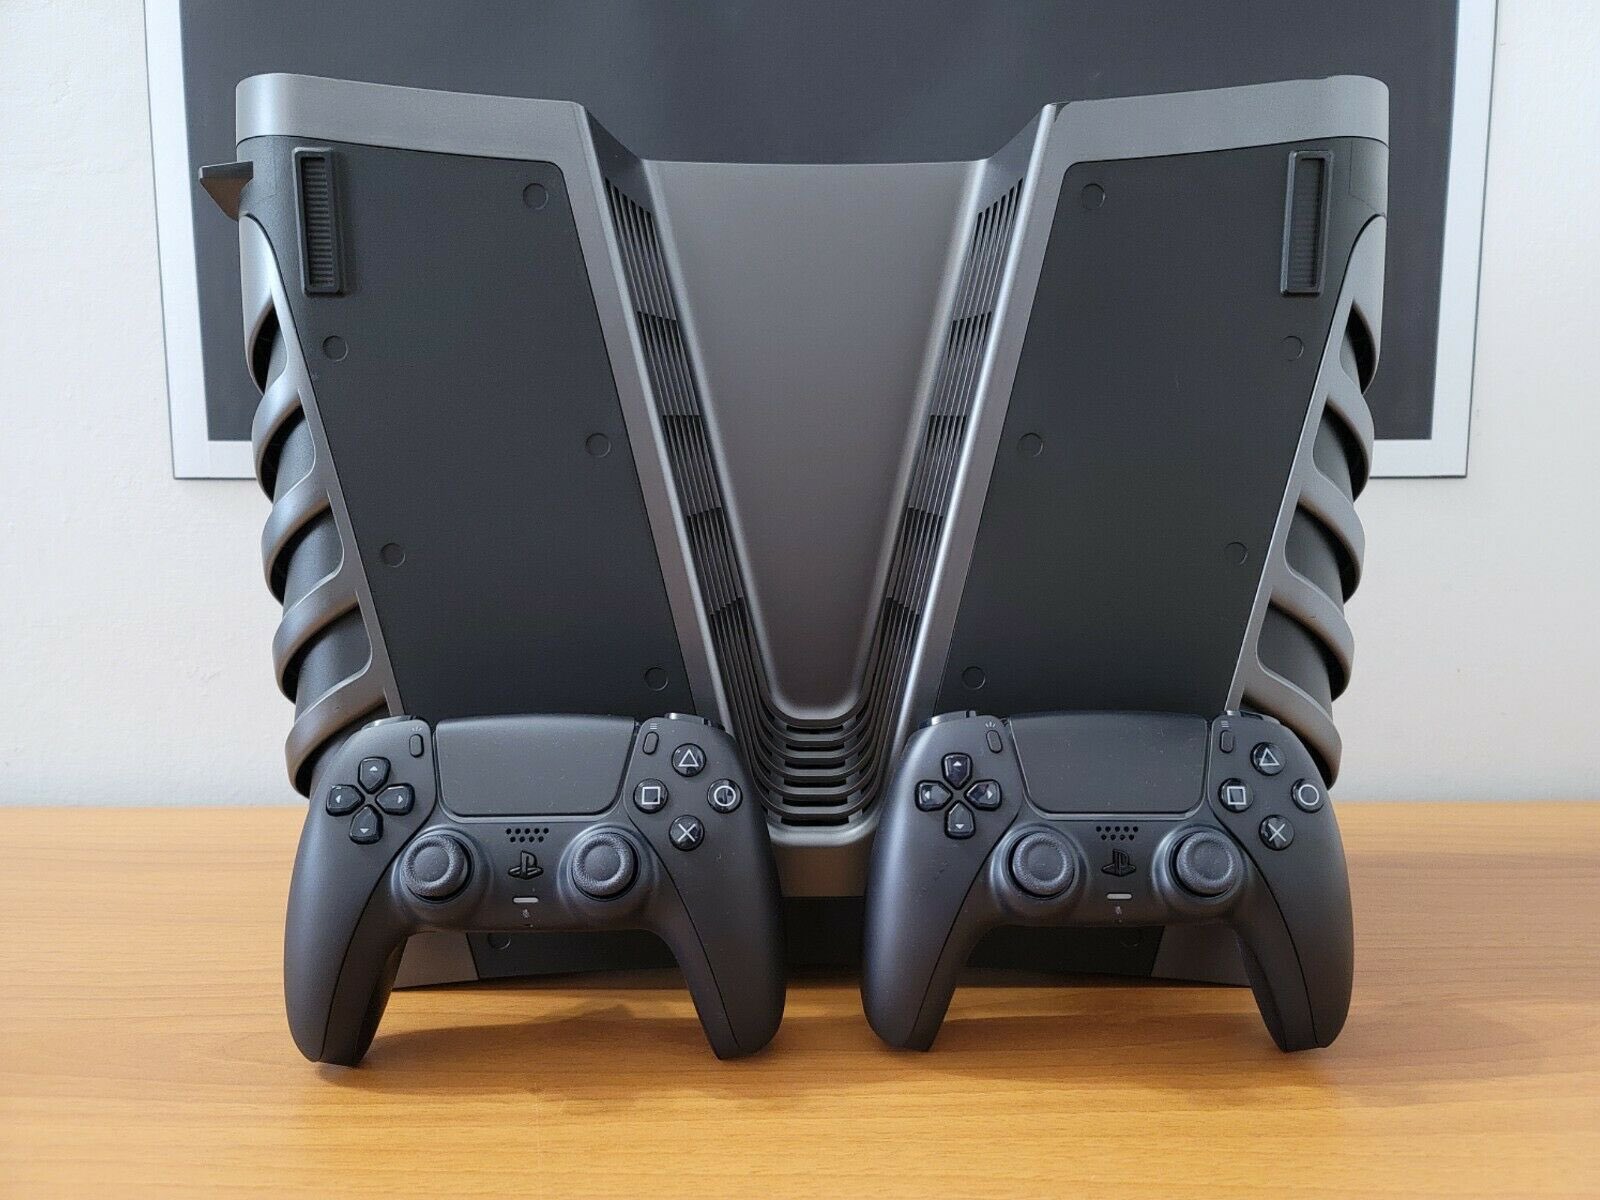 PS5 slim 3D model and PS5 fat 3d model size comparison : r/playstation